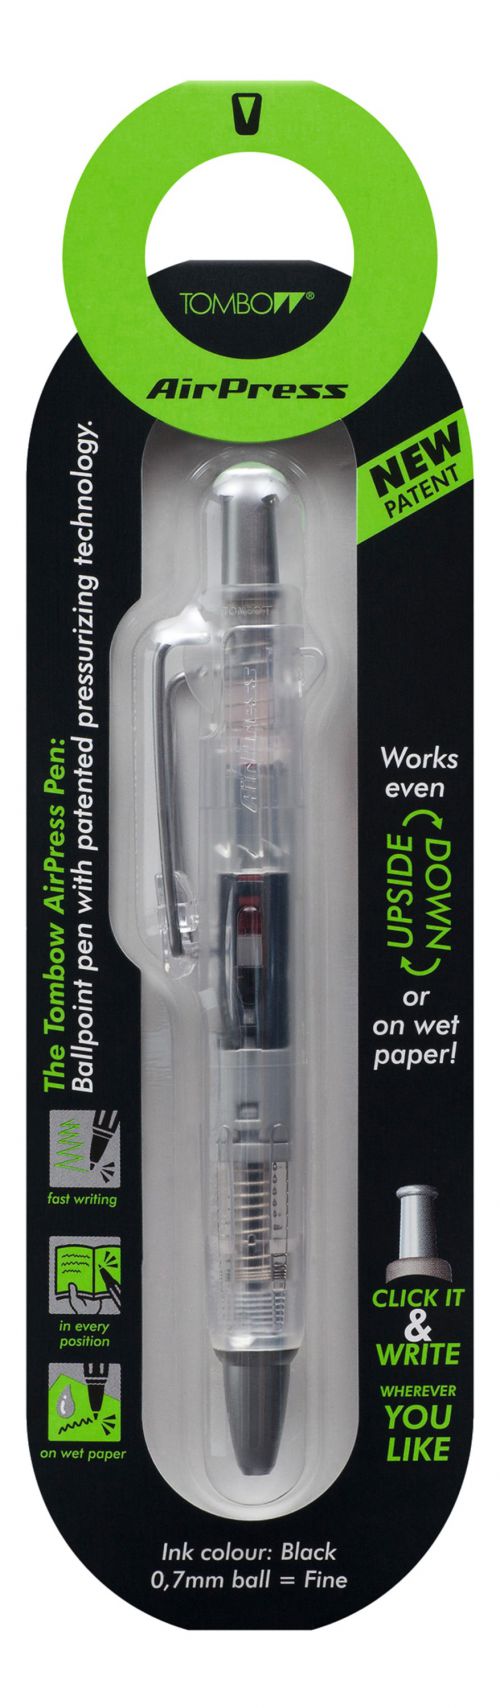 Ballpoint Tombow AirPress Retractable Ballpoint Pen 0.7mm Tip Transparent Barrel Black Ink